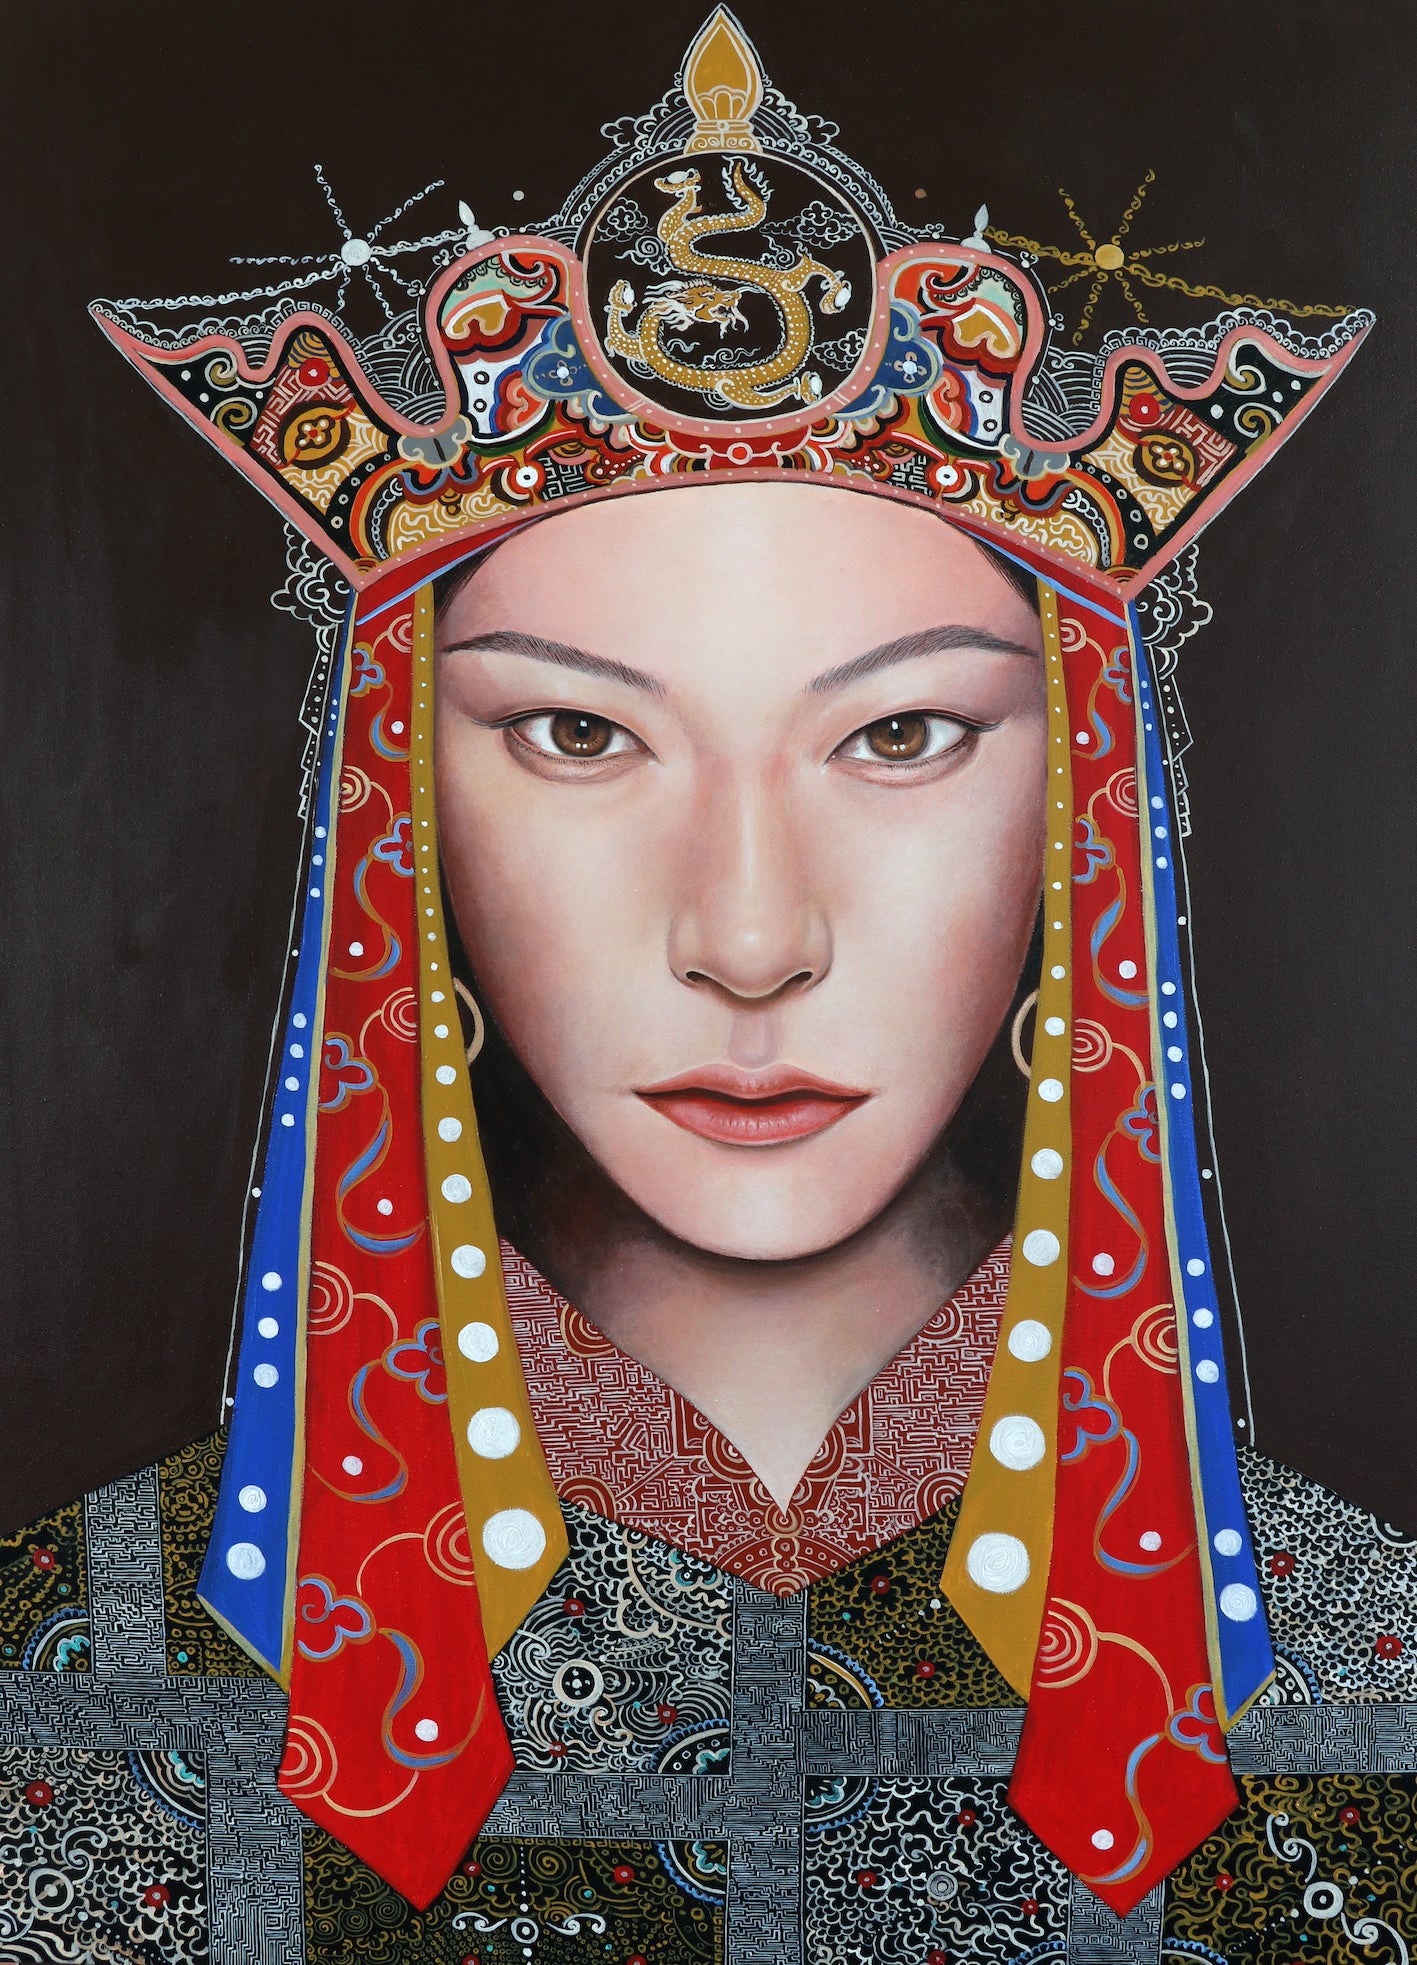 'INTIMATION OF SELF-AWARENESS' - Contemporary Bhutanese Painting - InspiredByBhutan